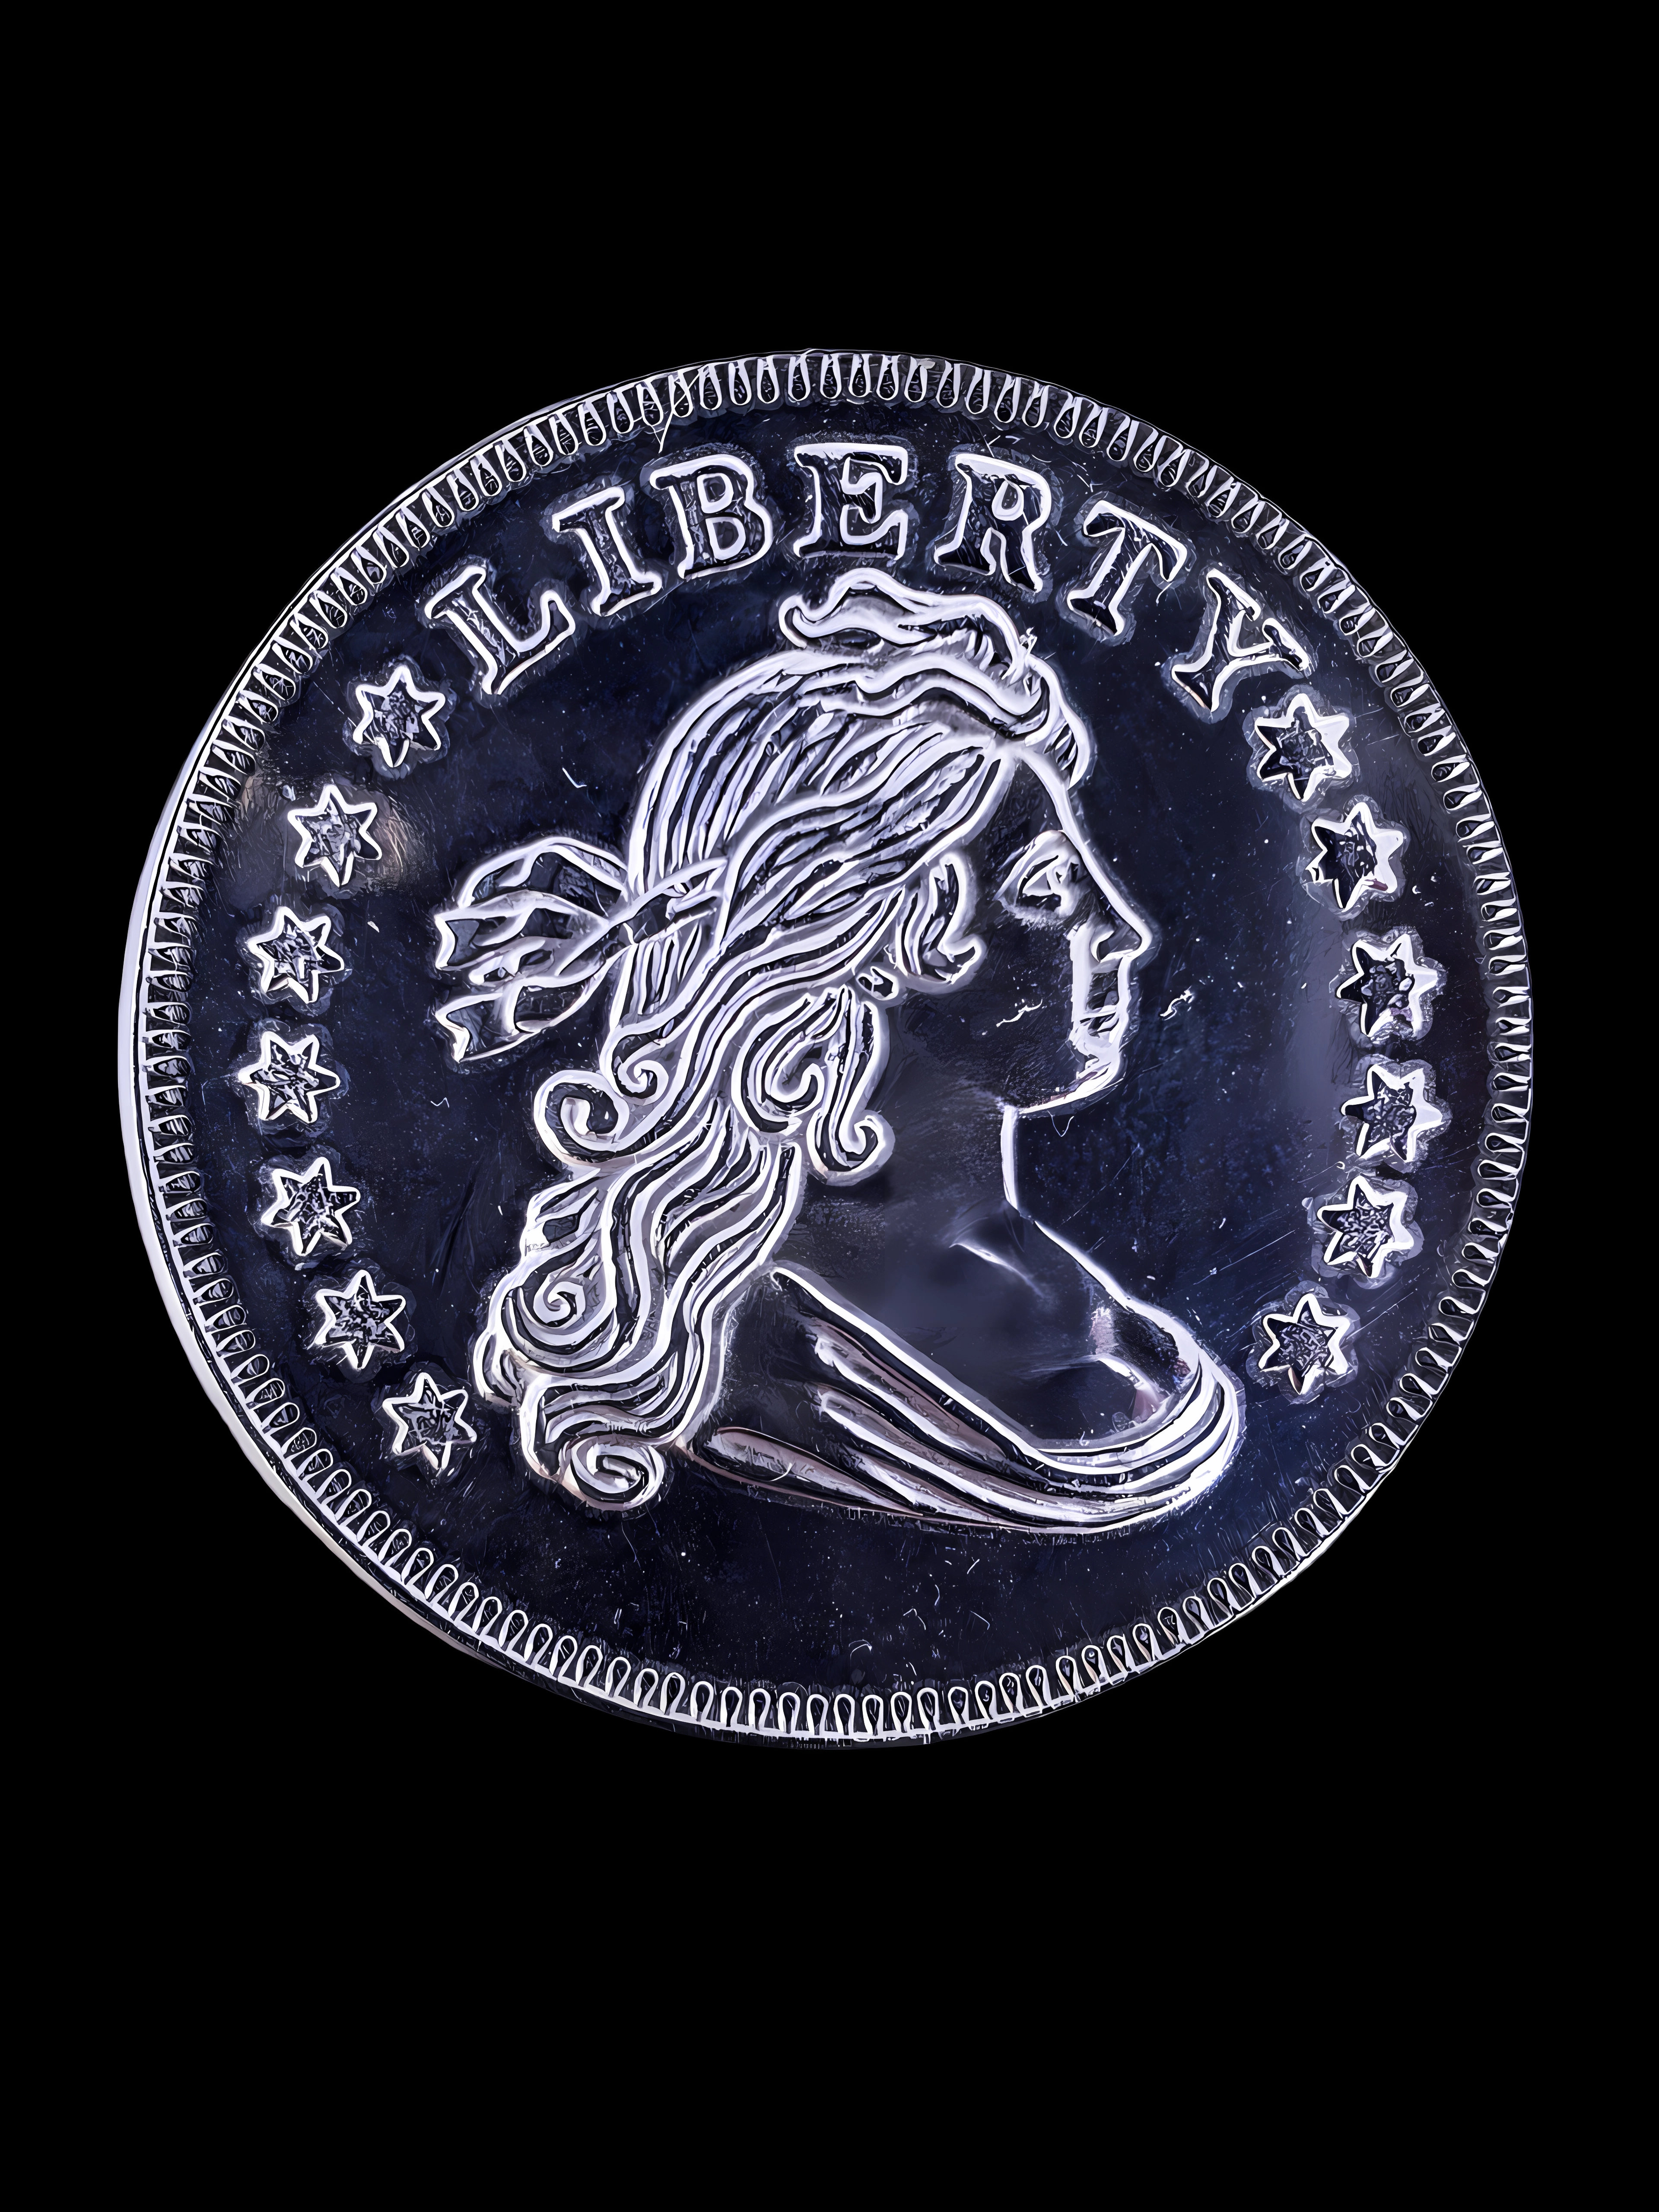 1oz American Eagle Classic Design Vintage Silver Coin